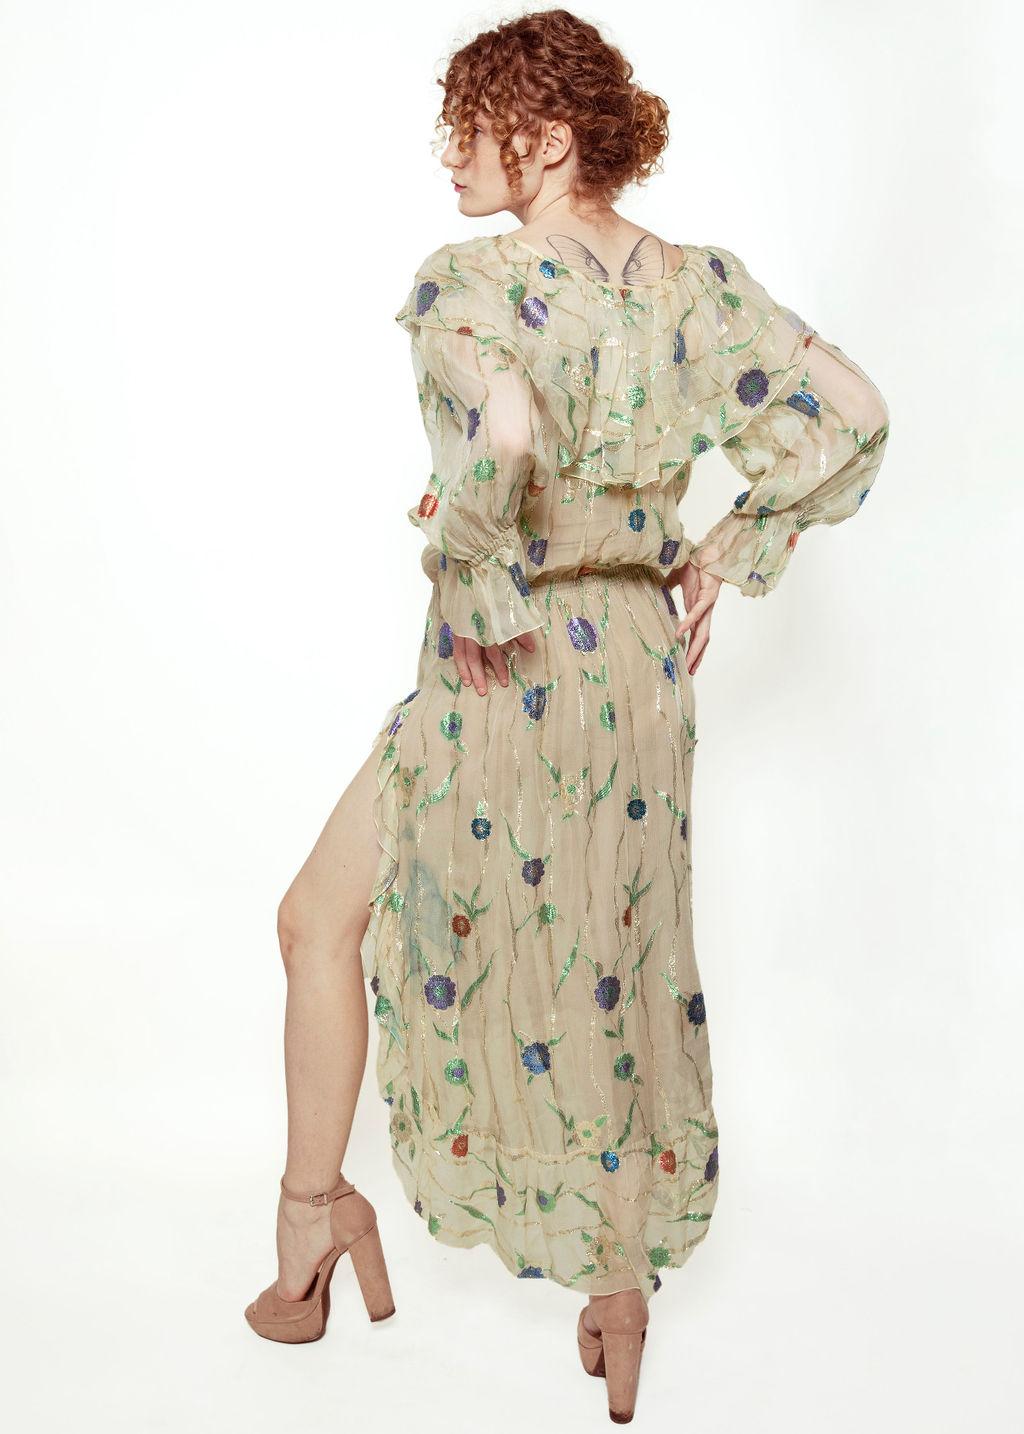 Yves Saint Laurent Sheer & Metallic Floral Dress 1